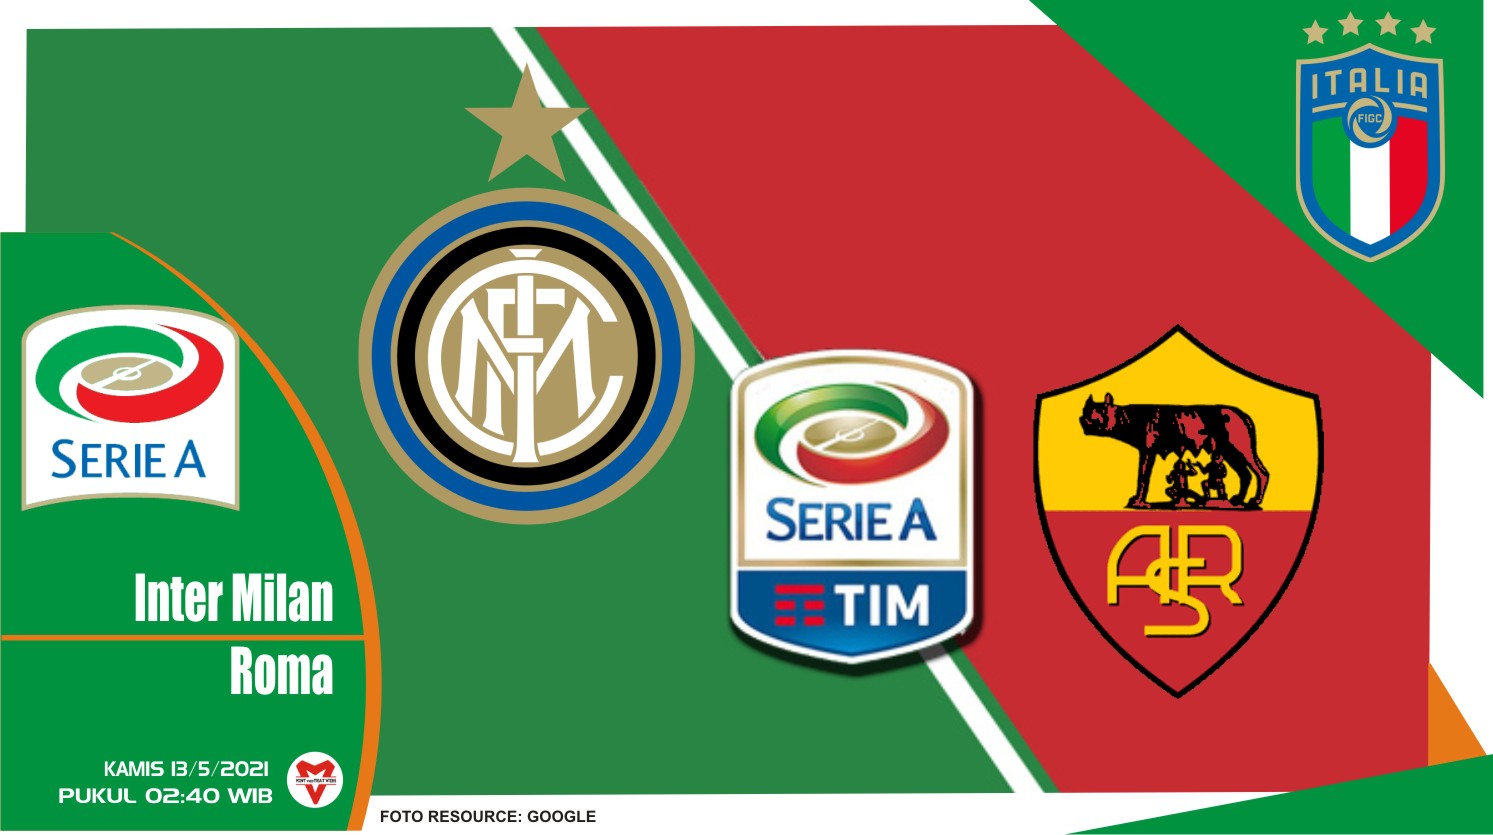 Prediksi Liga Italia: Inter Milan vs Roma - 13 Mei 2021